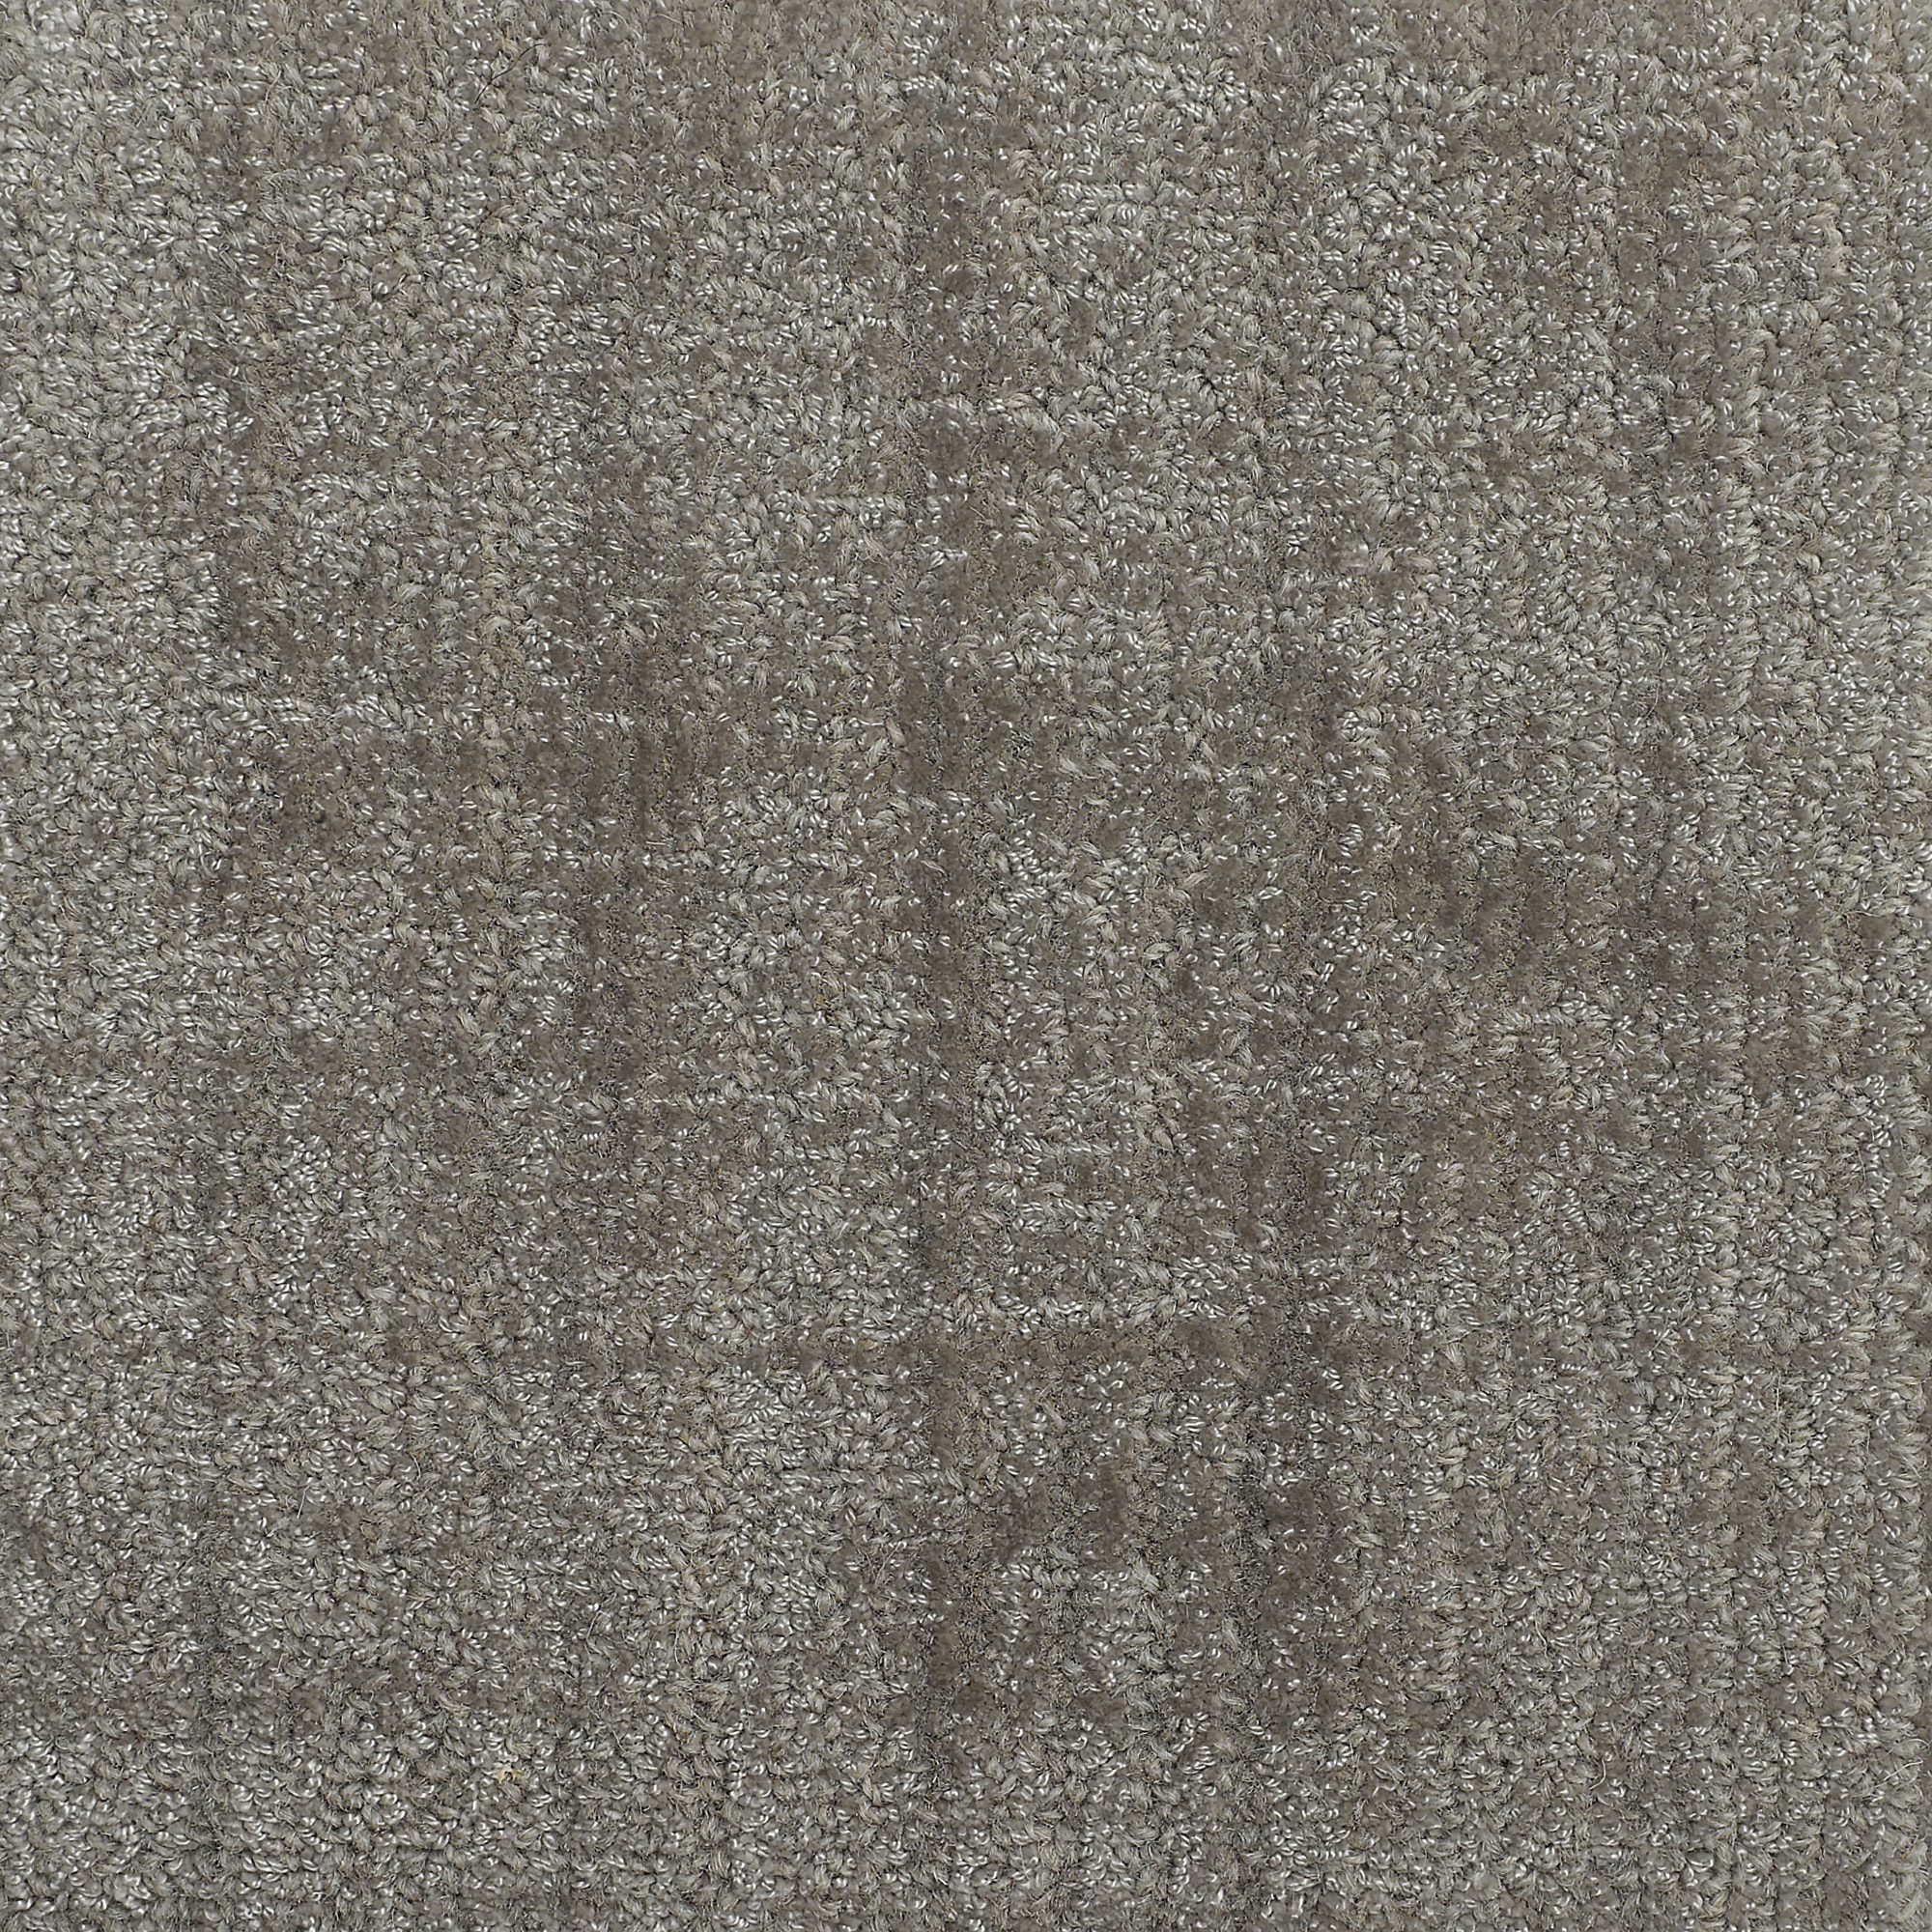 Chartwell: Moleskin - 46% Wool, 54% Tencel Carpet